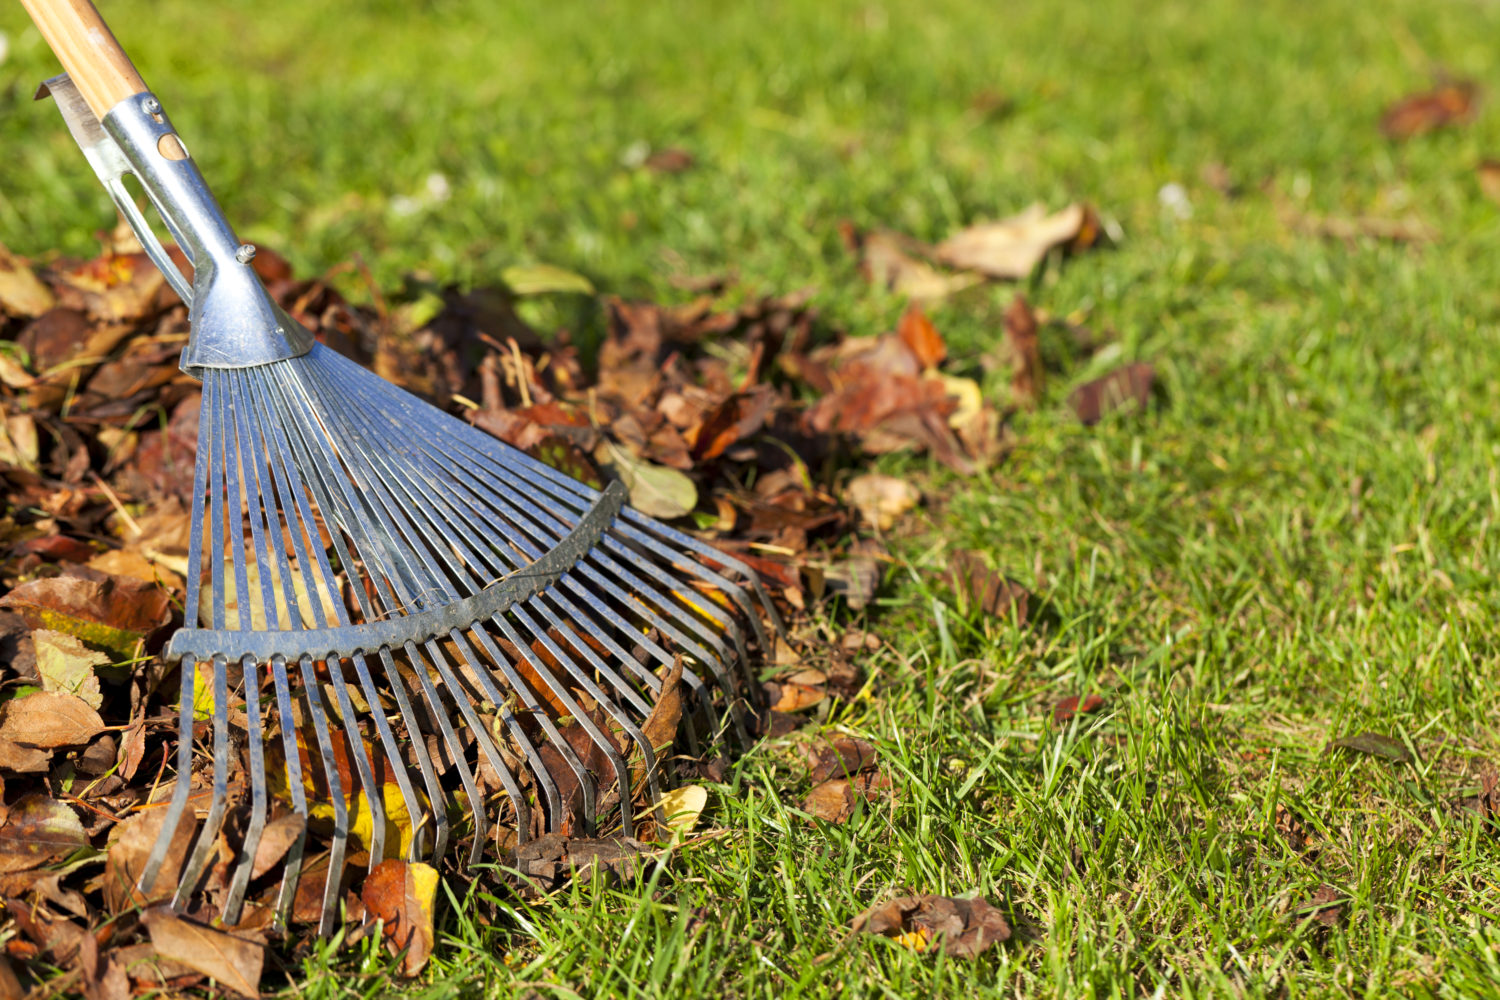 Community leaf raking event set for Saturday, Oct. 22